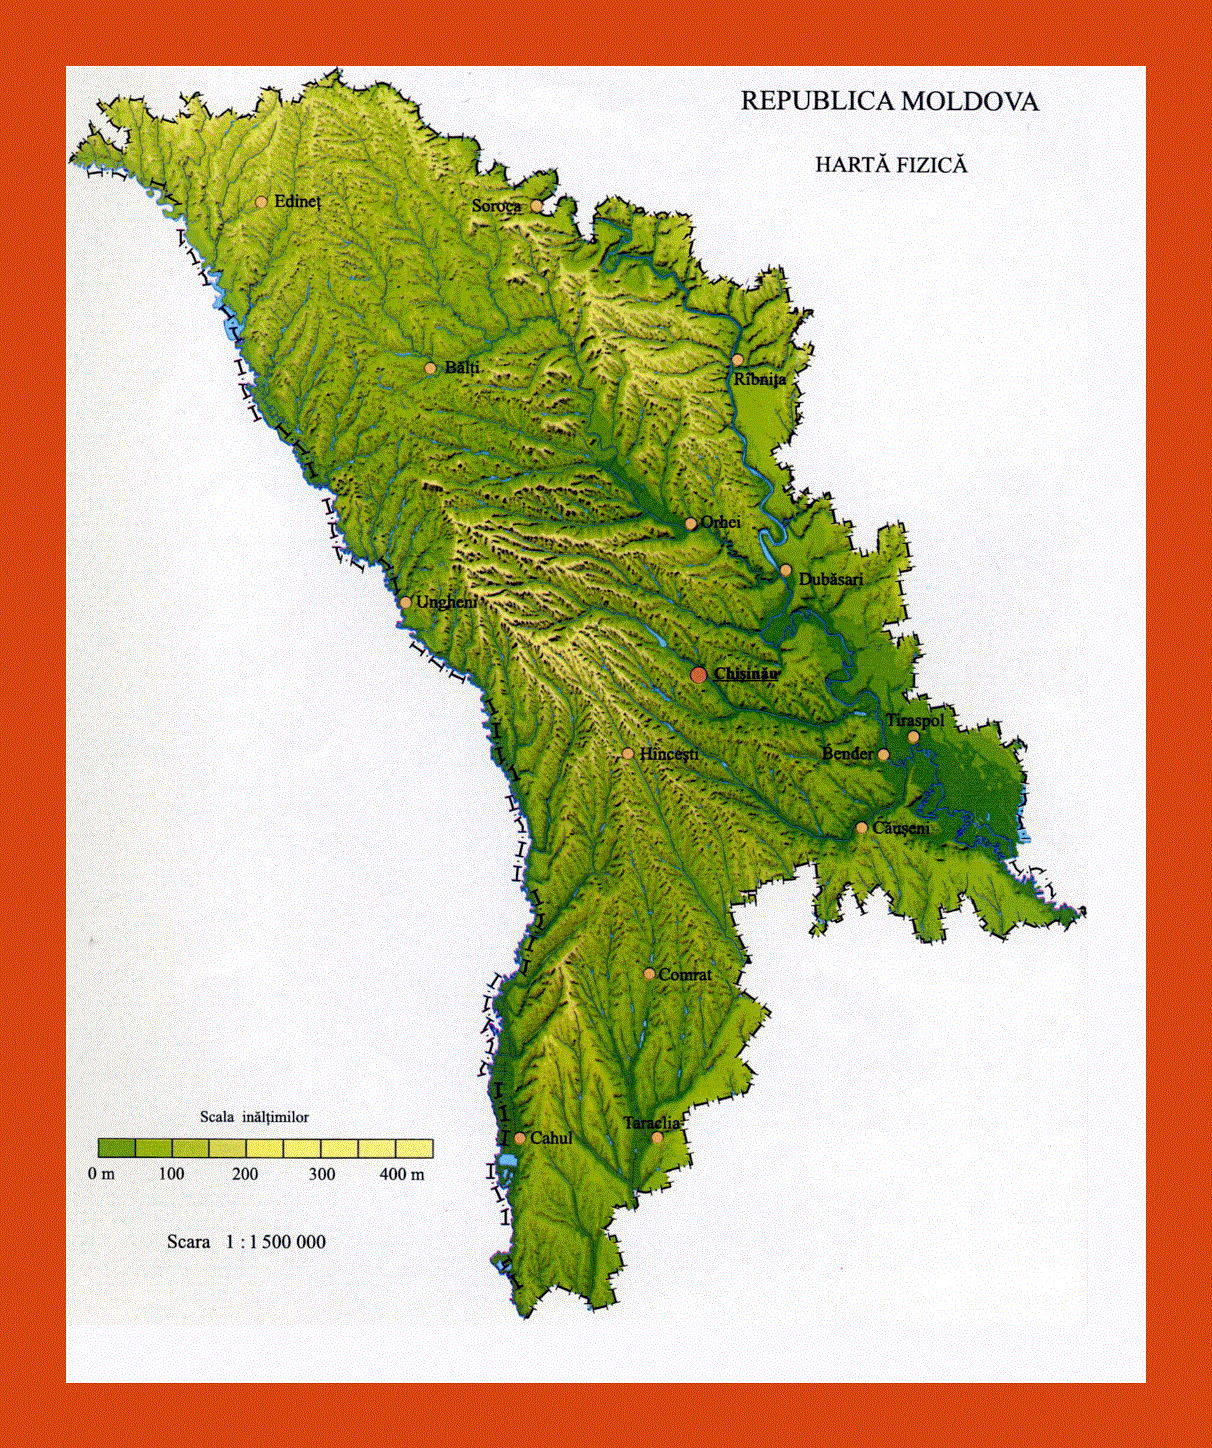 Relief map of Moldova